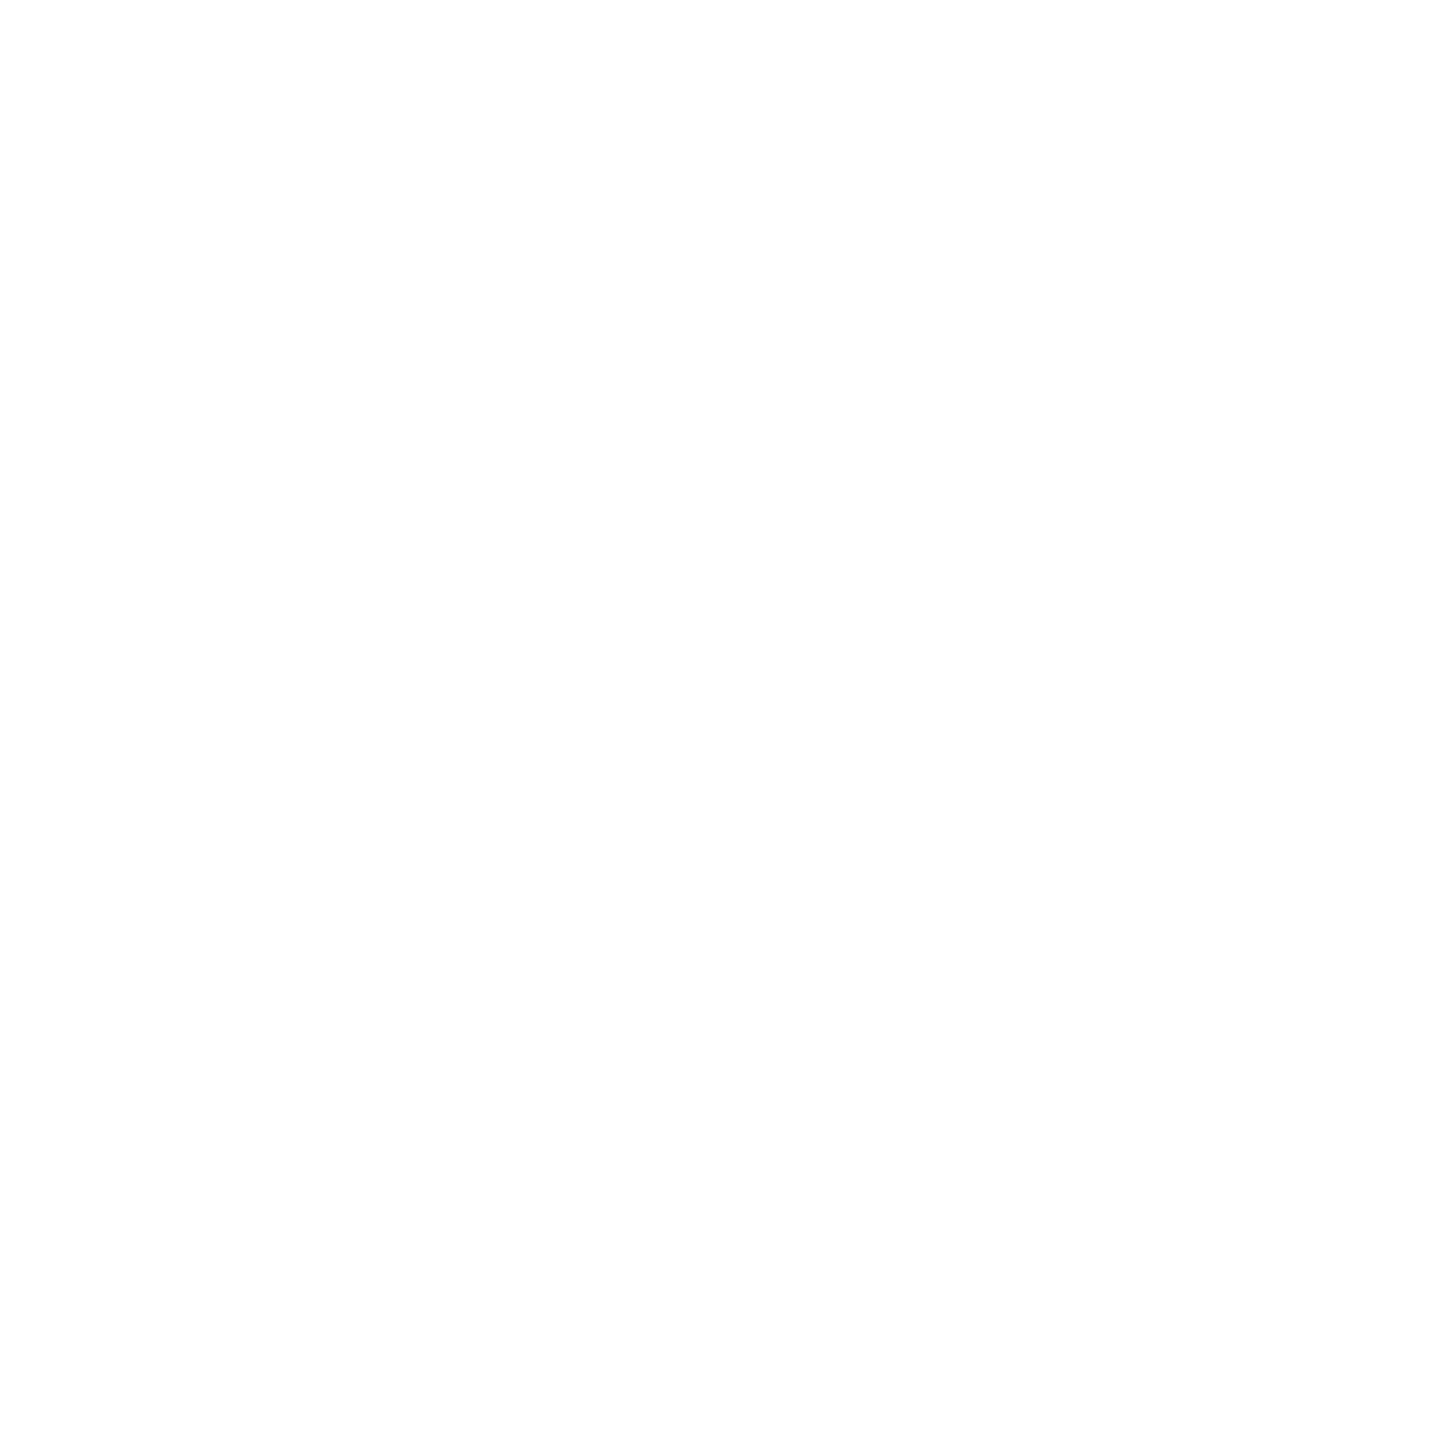 GCF Uppsala